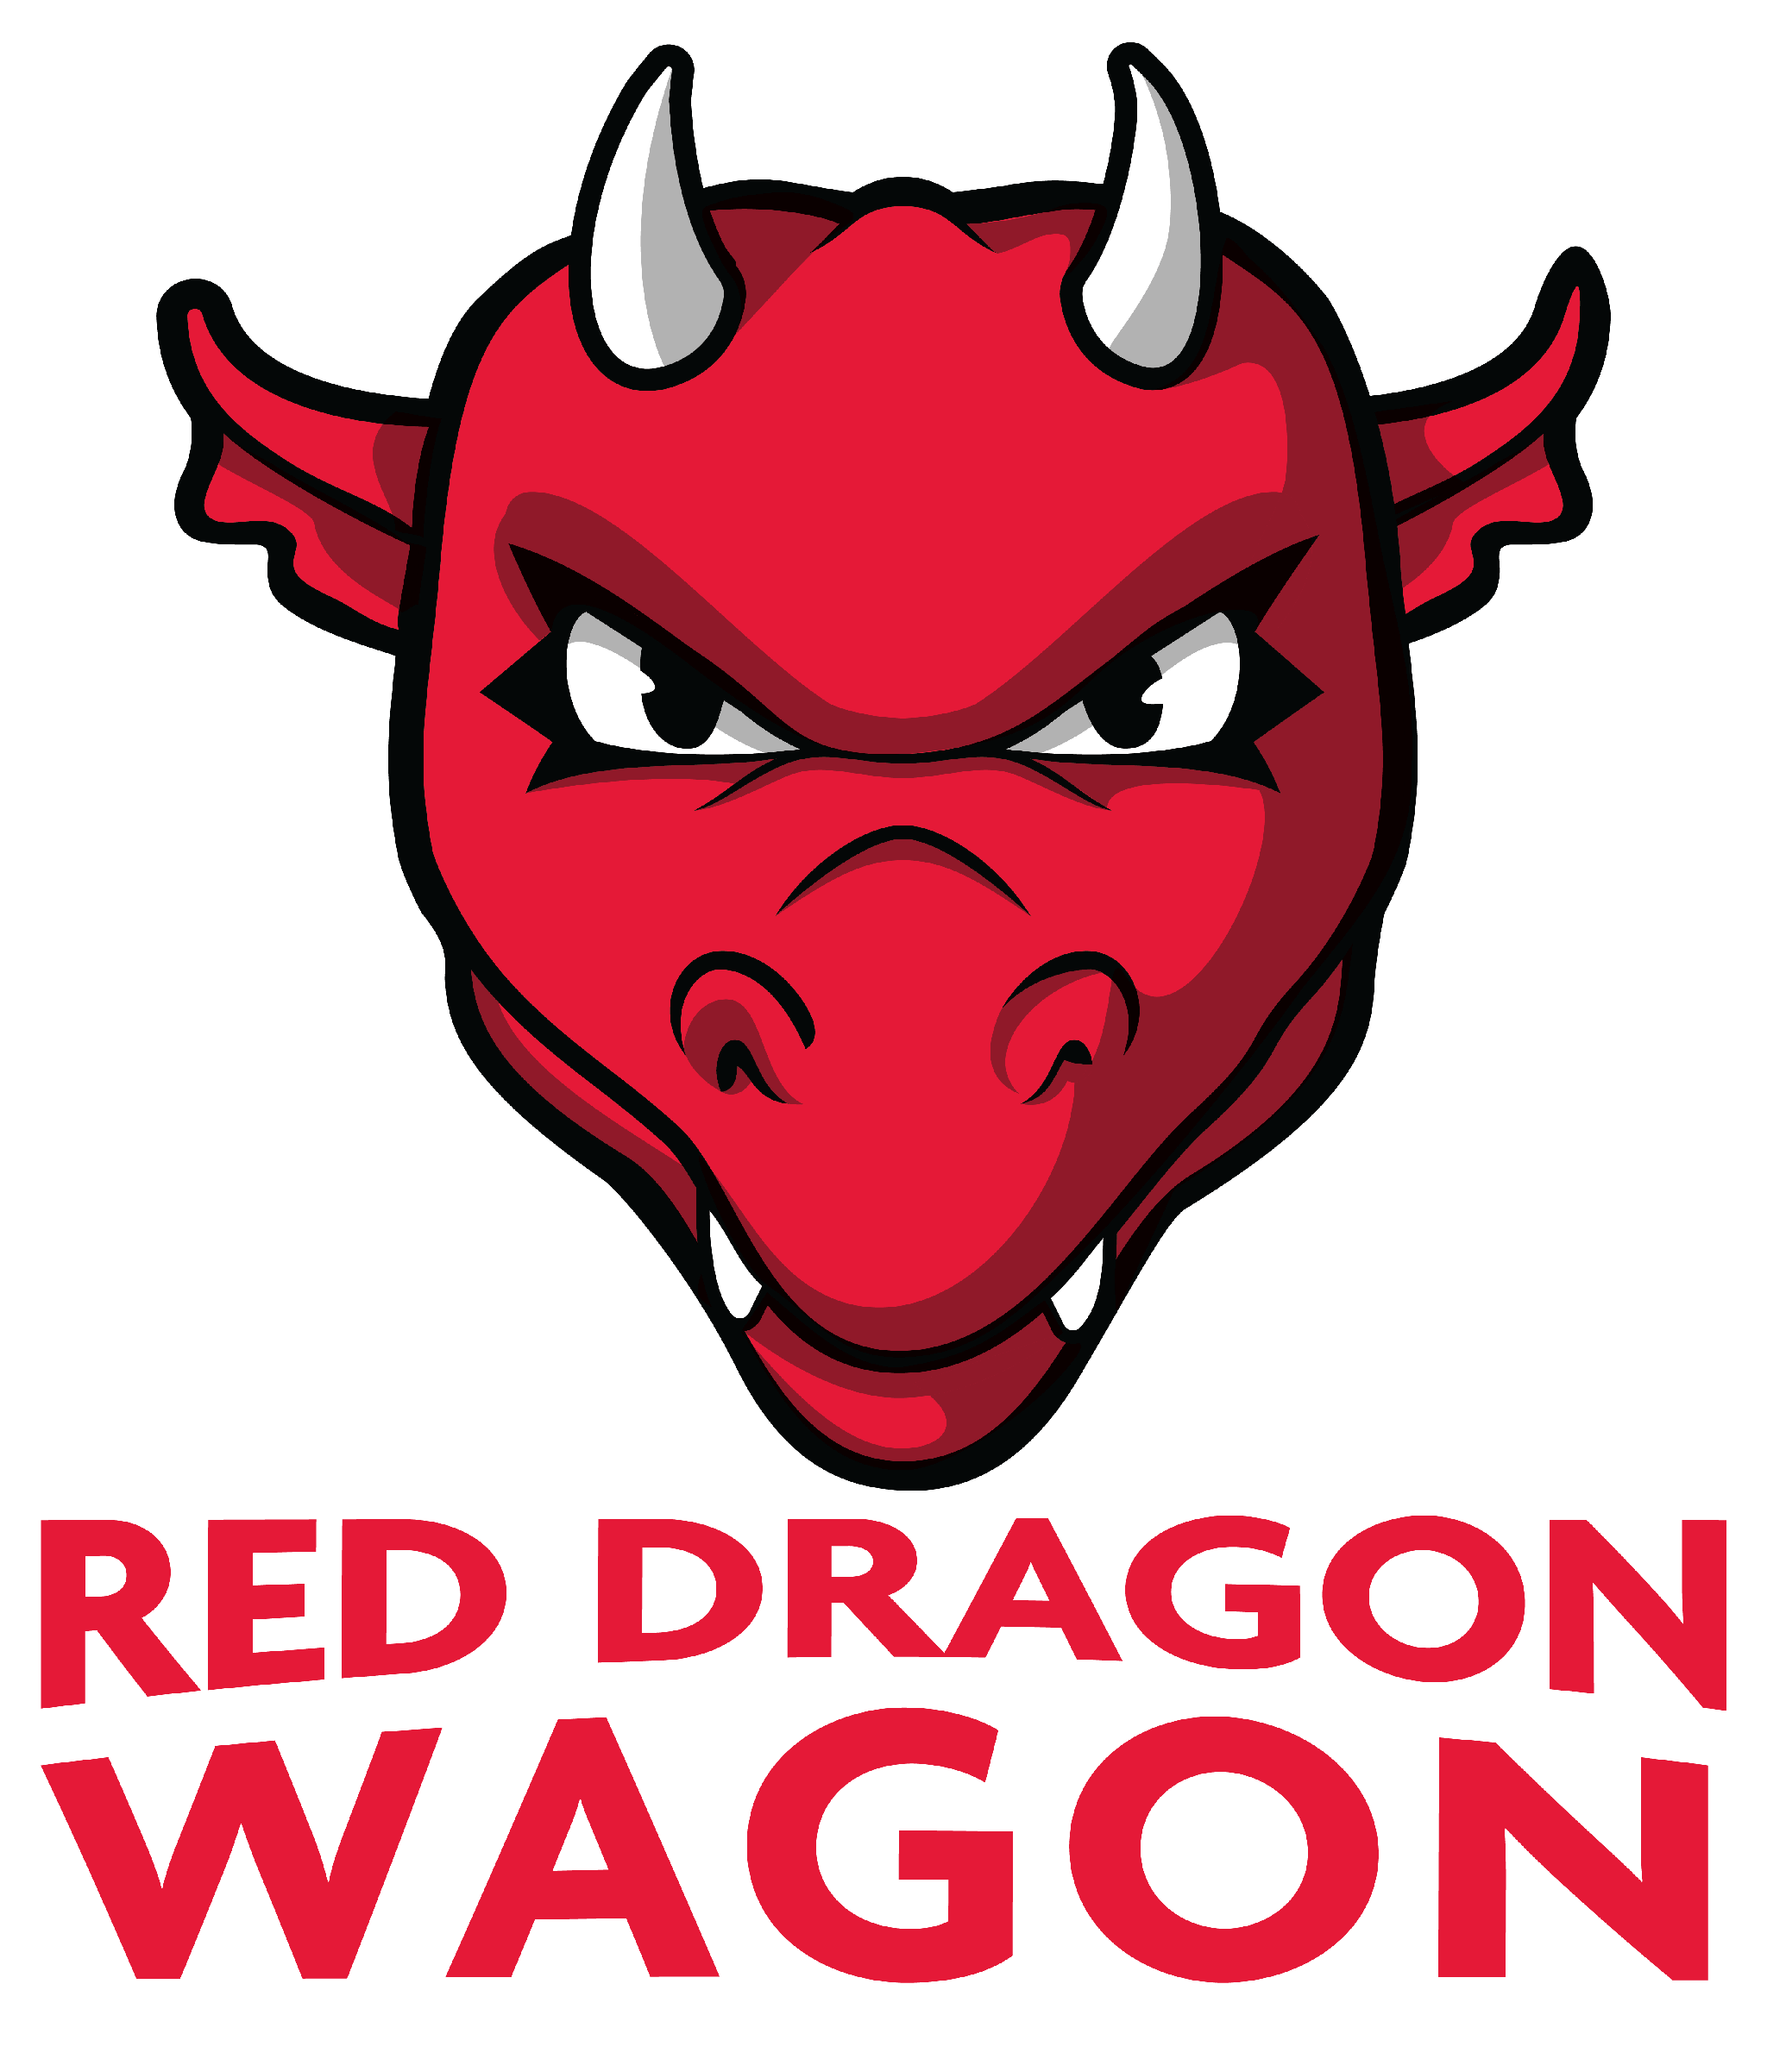 Red Dragon Wagon logo